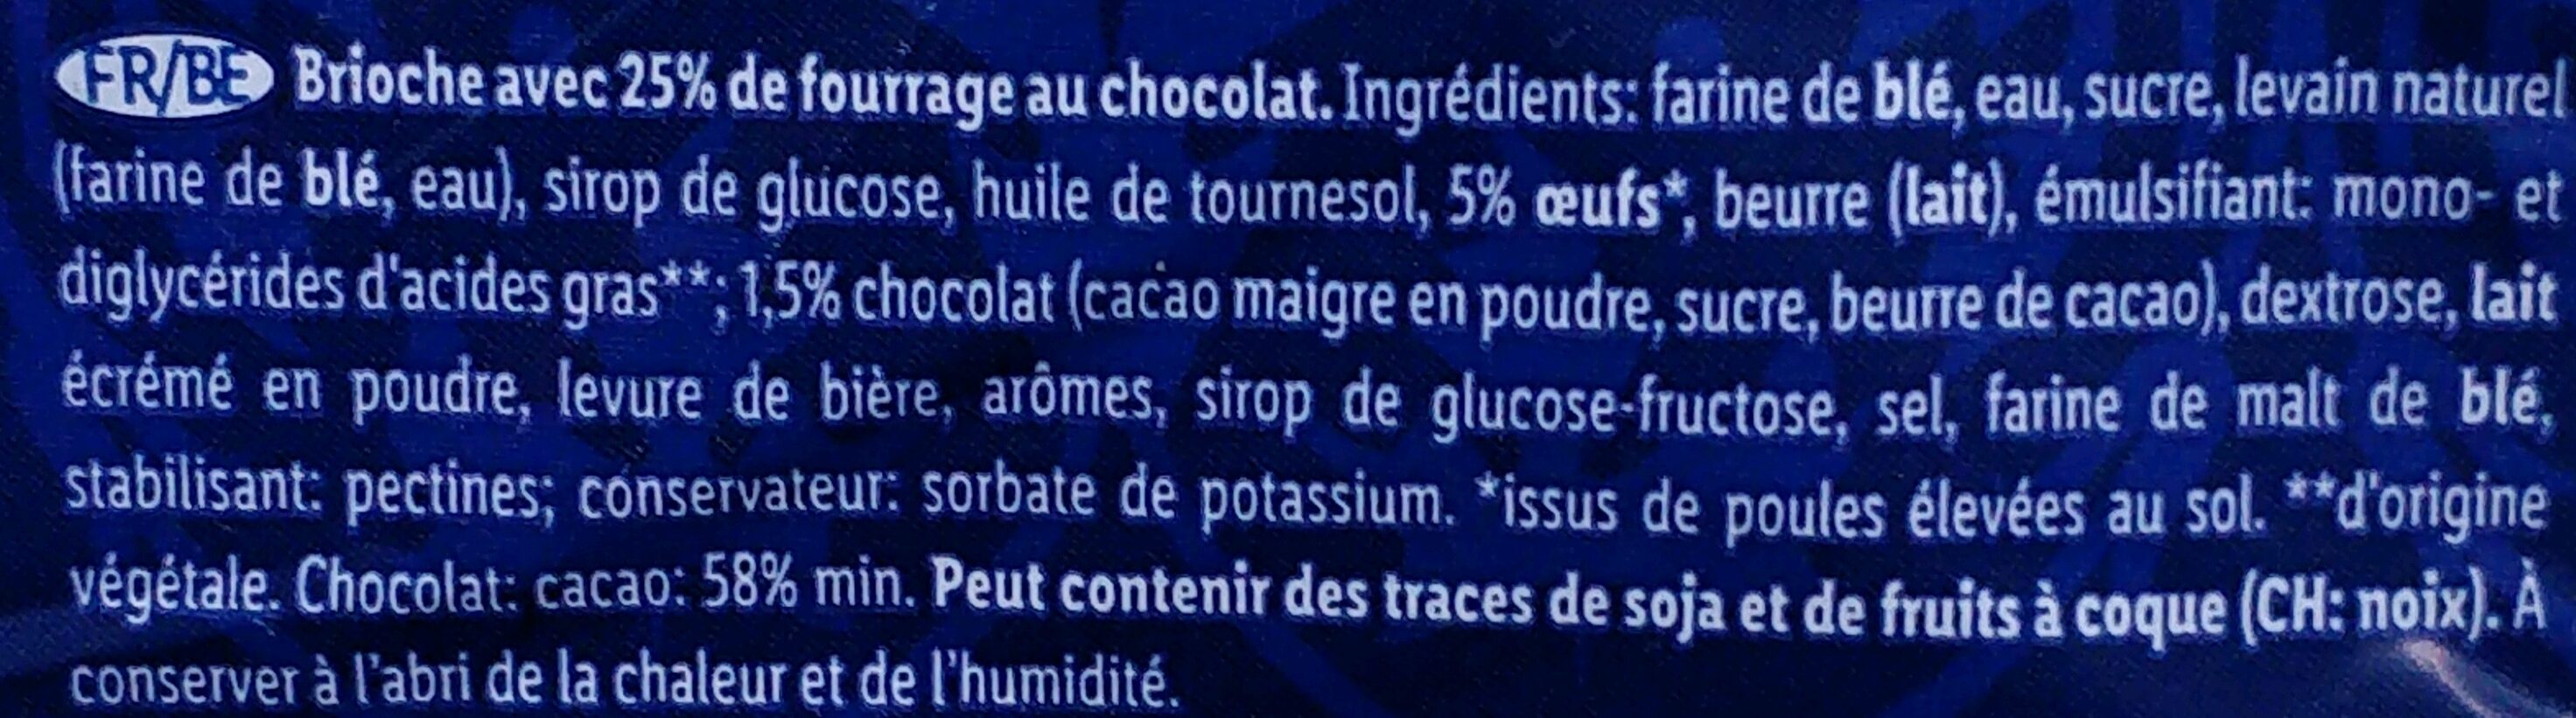 Cornetti al cioccolato - Ingrédients